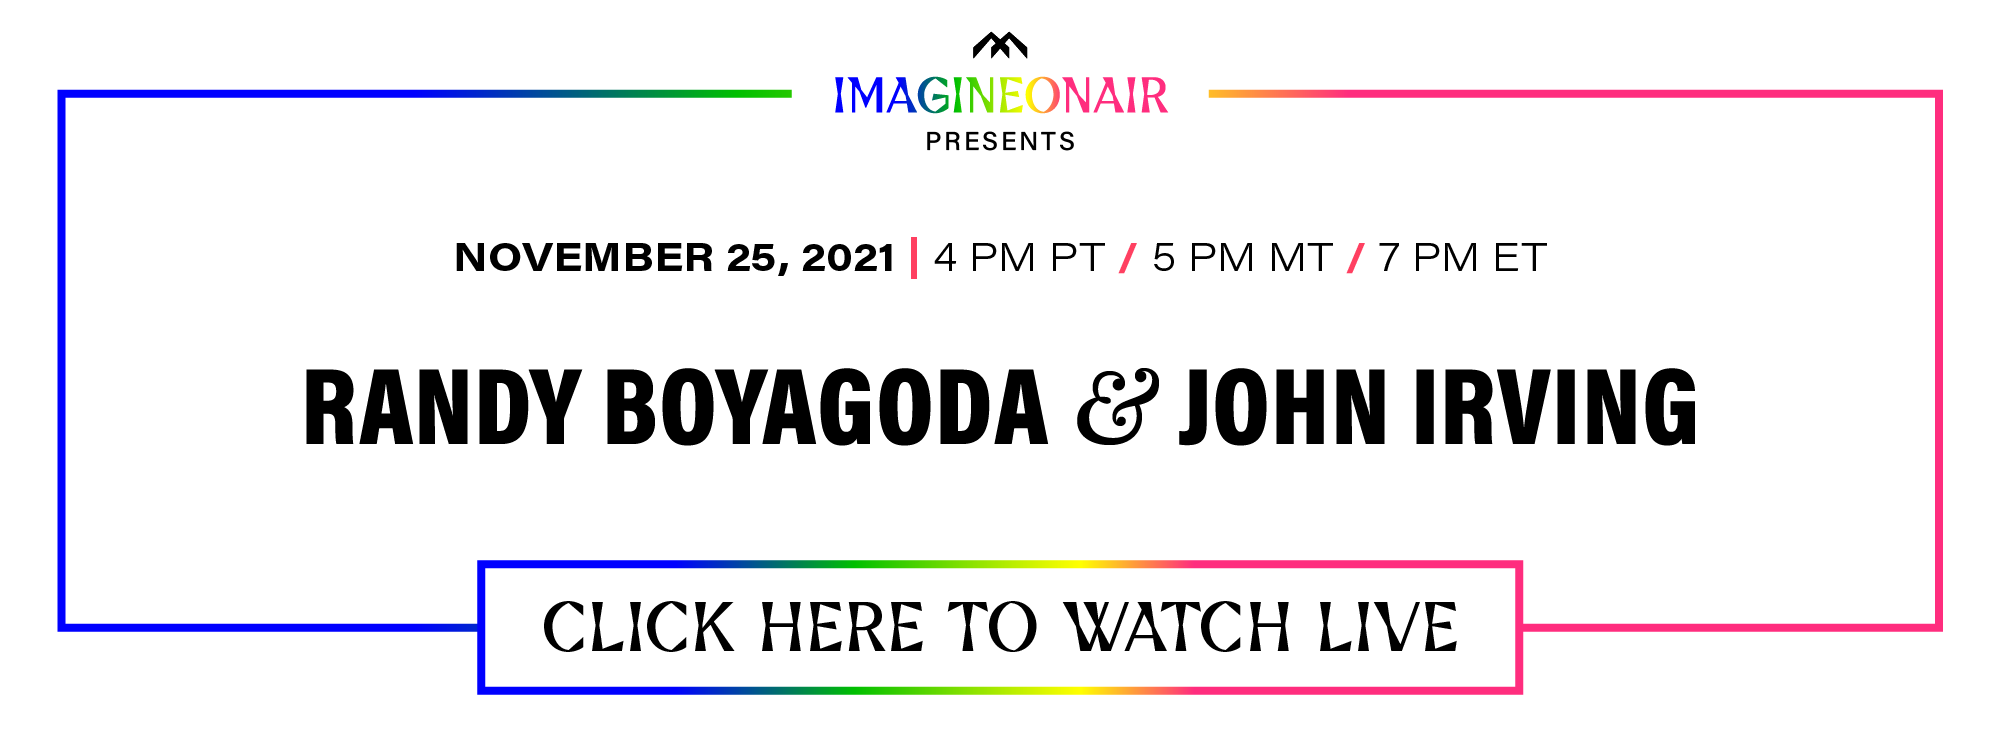 Watch Live on Jan 20 at 5pm Randy Boyagoda and John Irving